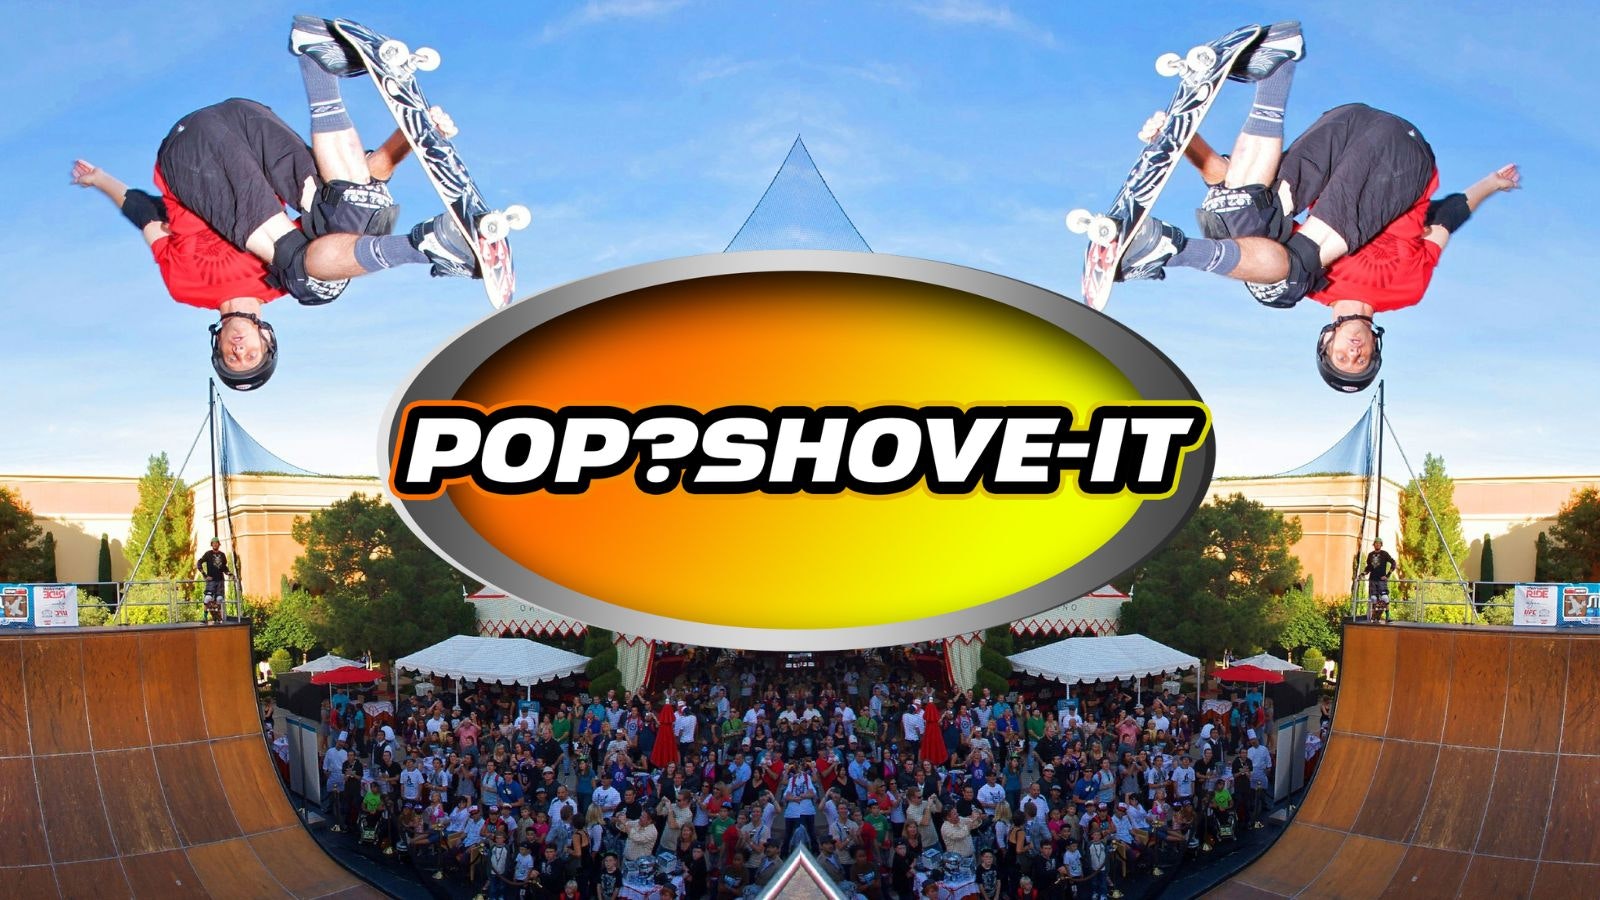 POP? SHOVE IT! – Tony Hawks Disco